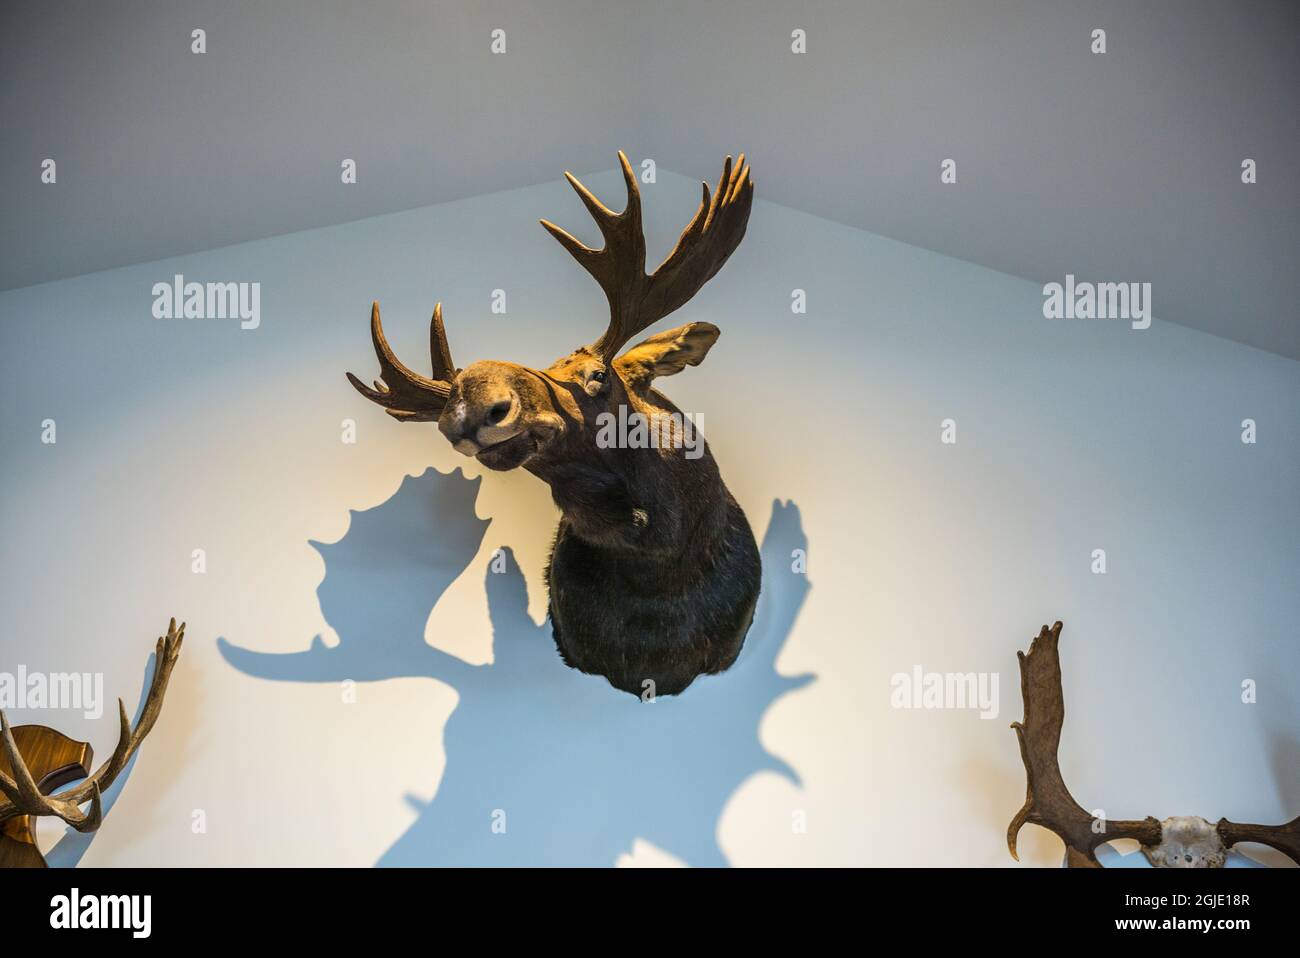 USA, Maine, Machias. Stuffed moose head. Stock Photo